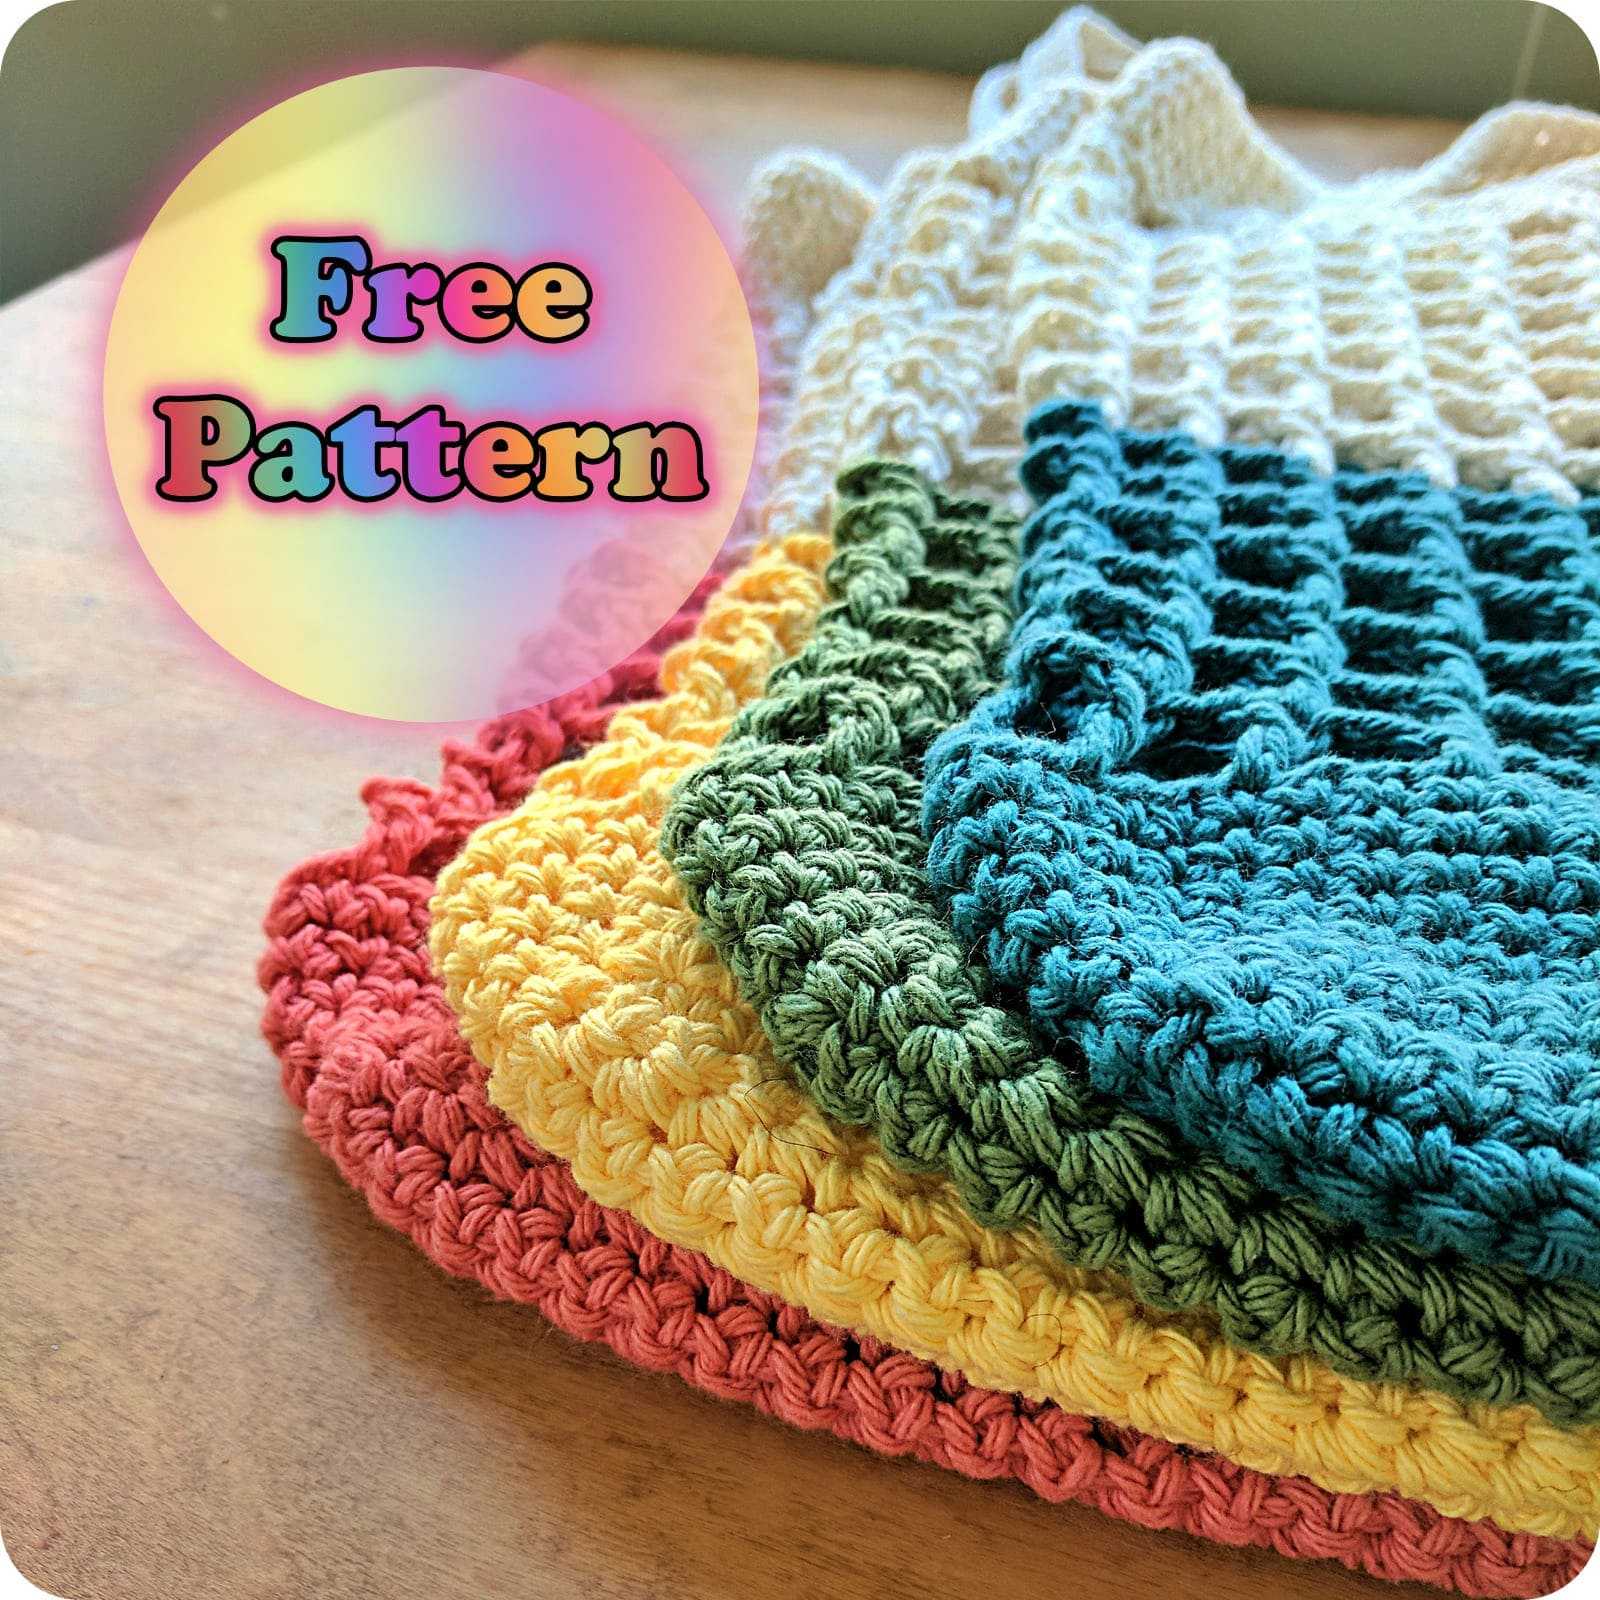 Crochet market bag patterns